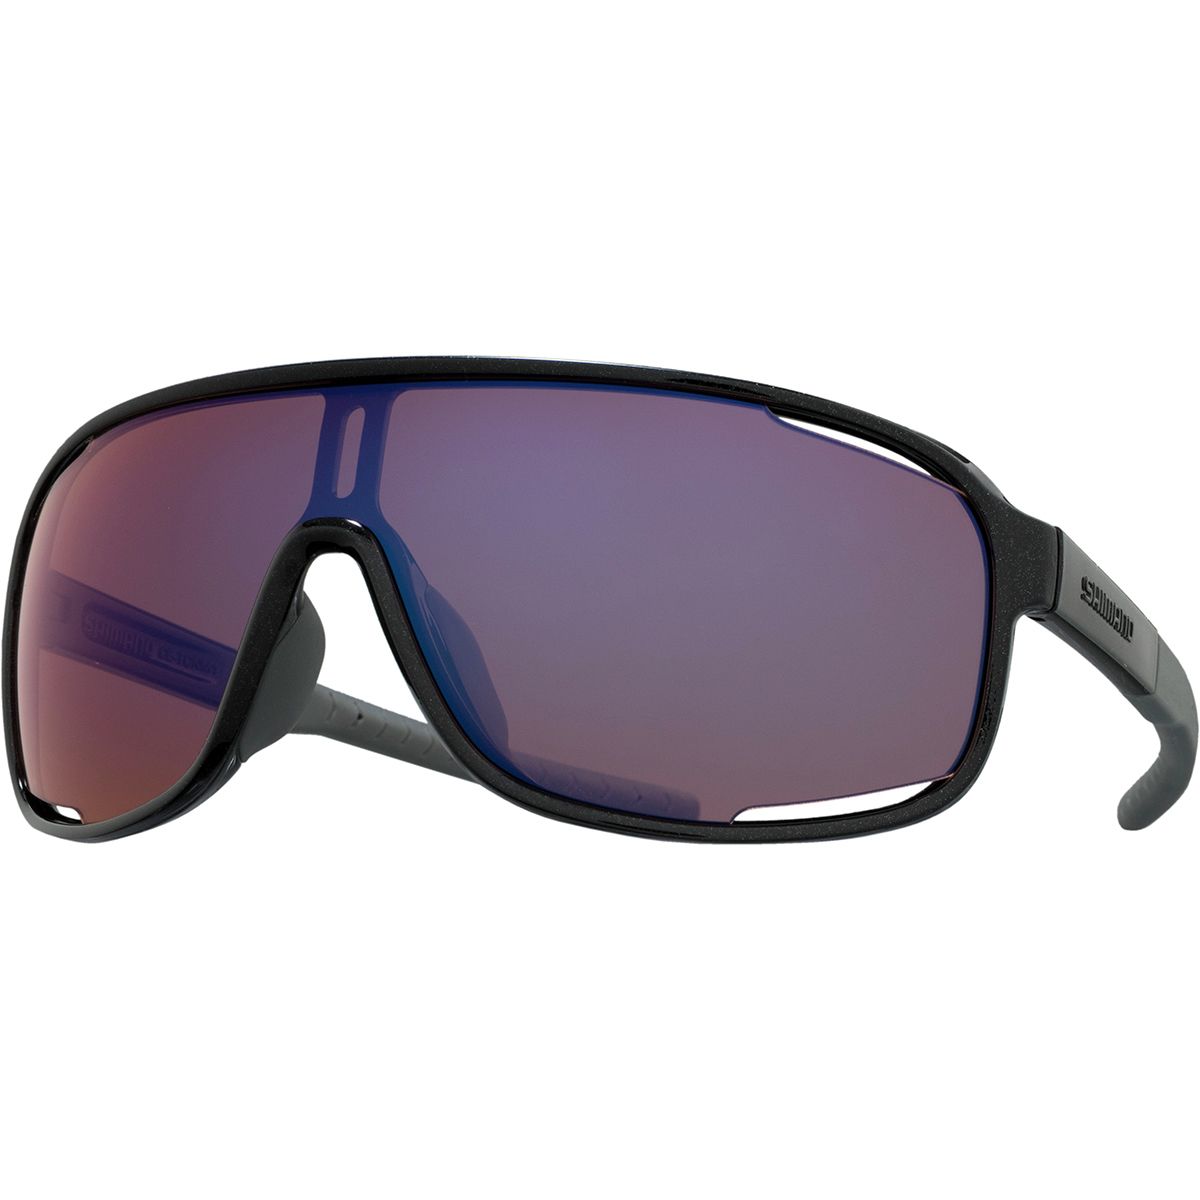 Shimano Technium Cycling Sunglasses - CE-TCNM - Men's